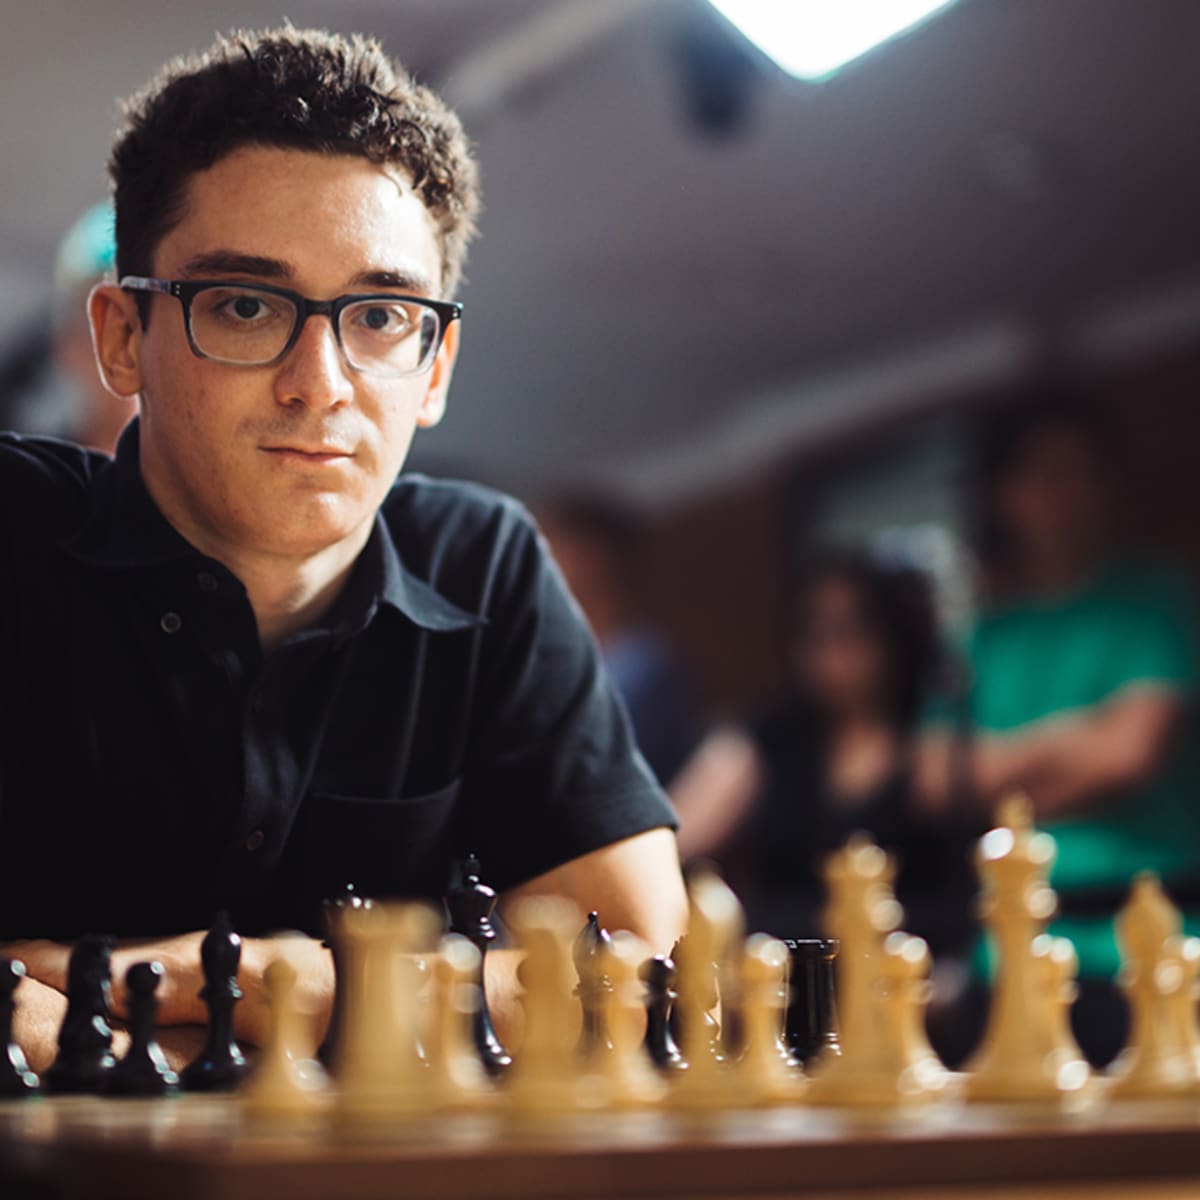 American Grandmaster Fabiano Caruana Wins 2017 London Chess Classic